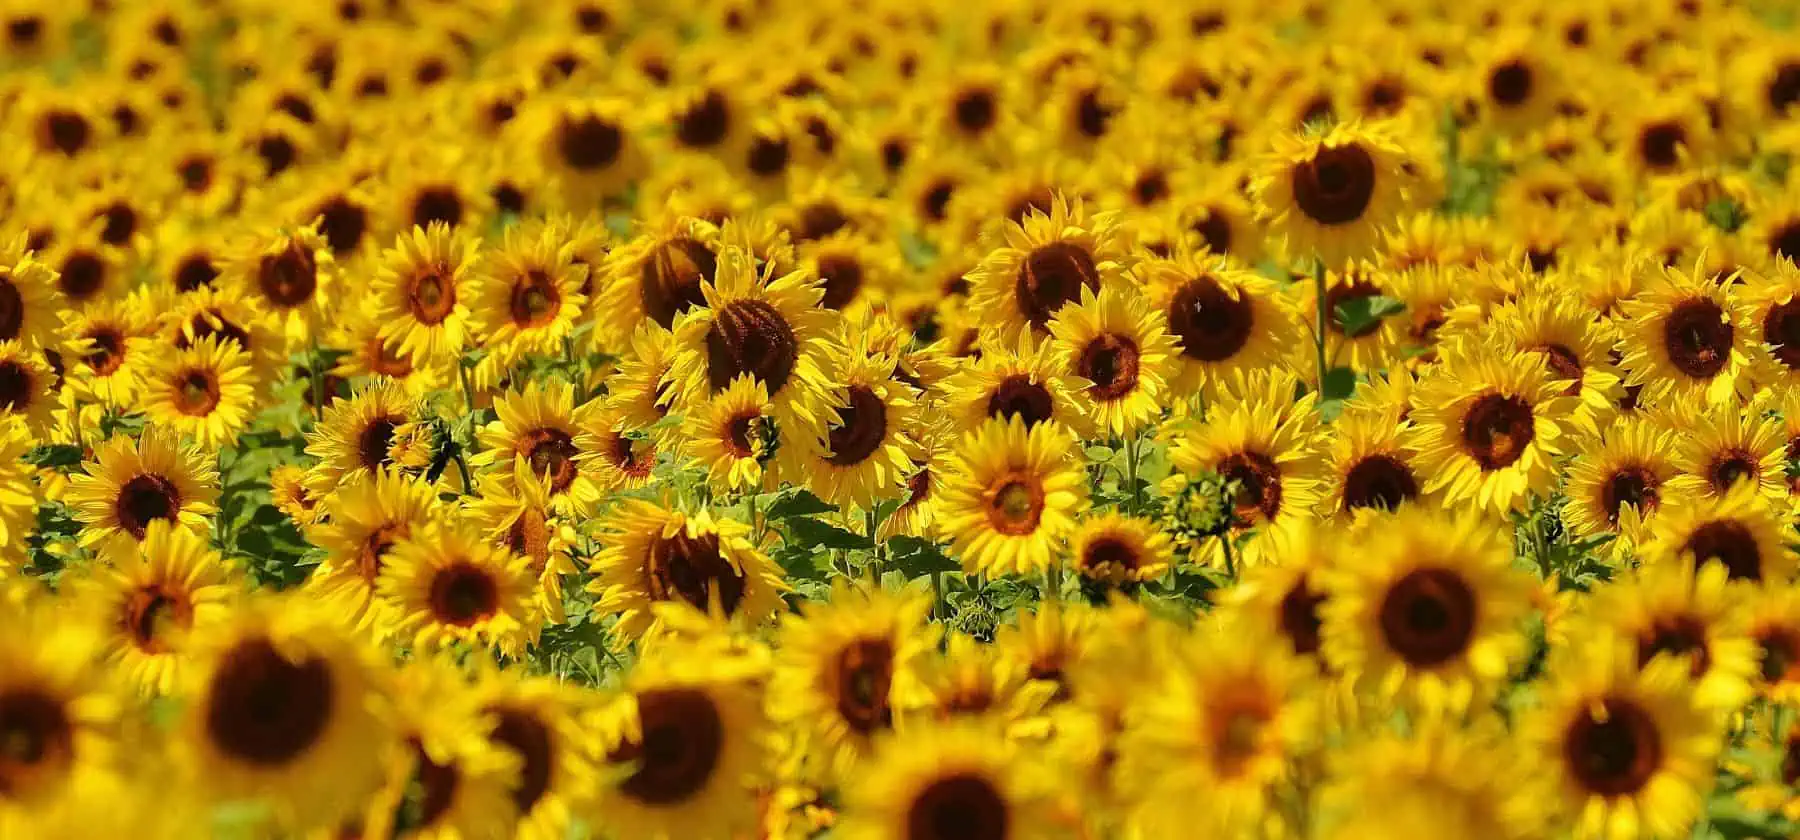 Sunflower Seed Stocks